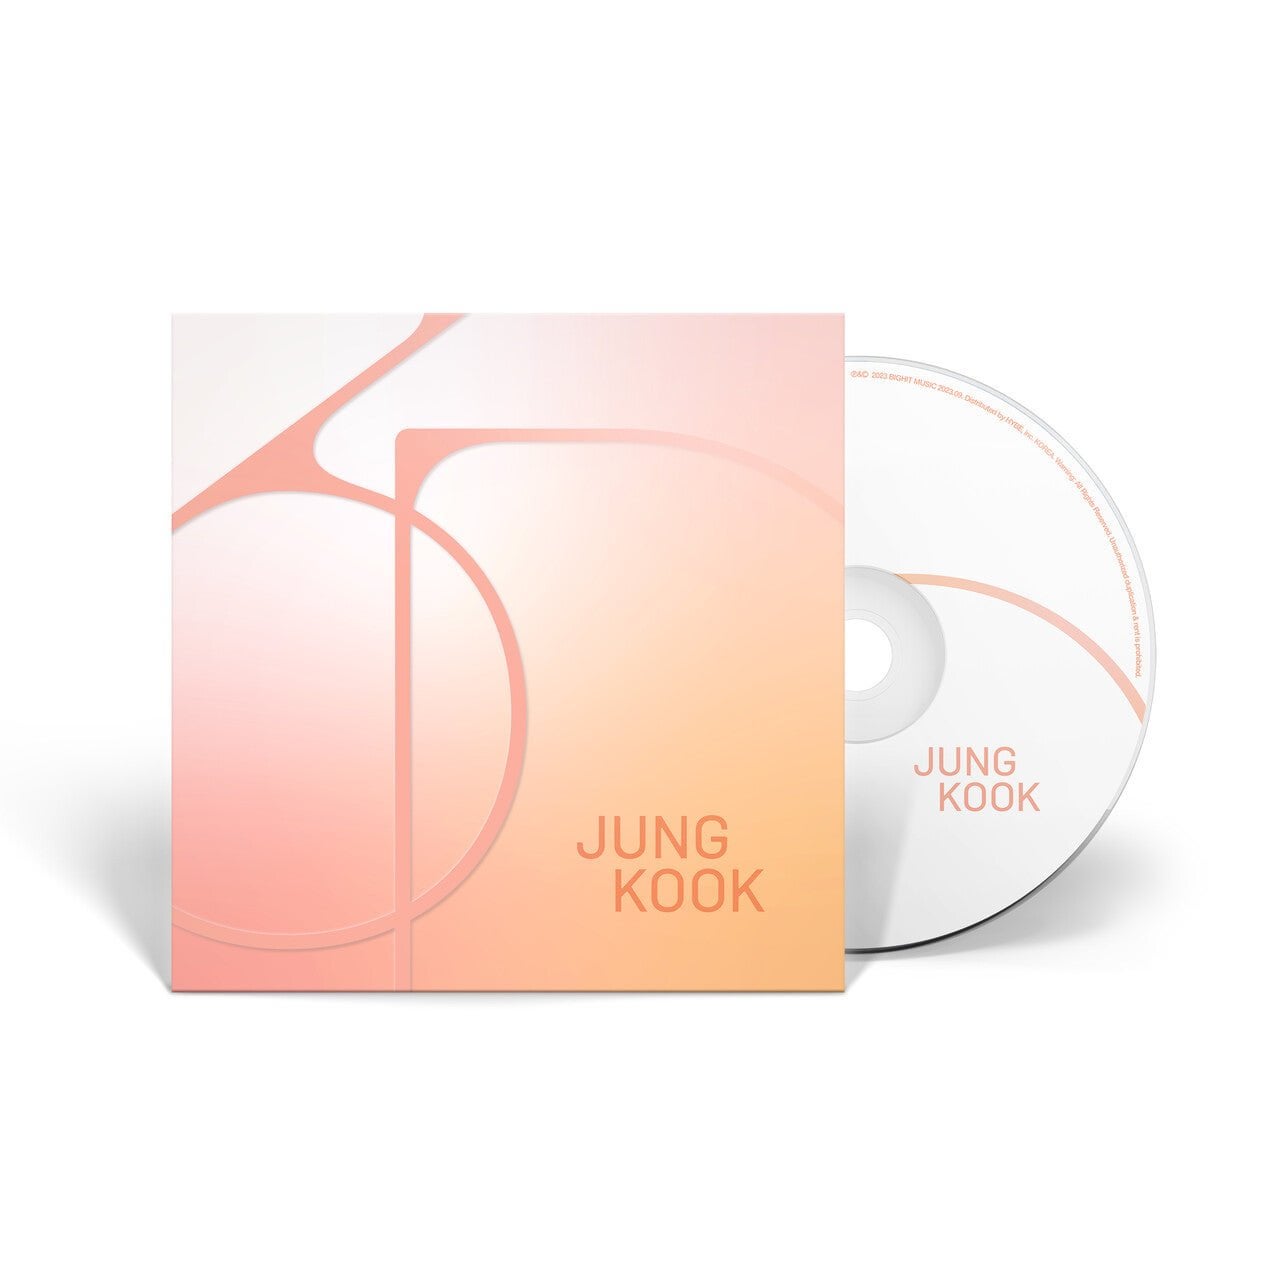 230927 Geffen Records: The BTS UK store is now open! Pre-order Jung Kook of BTS “3D - Alternate Ver. Single CD” here